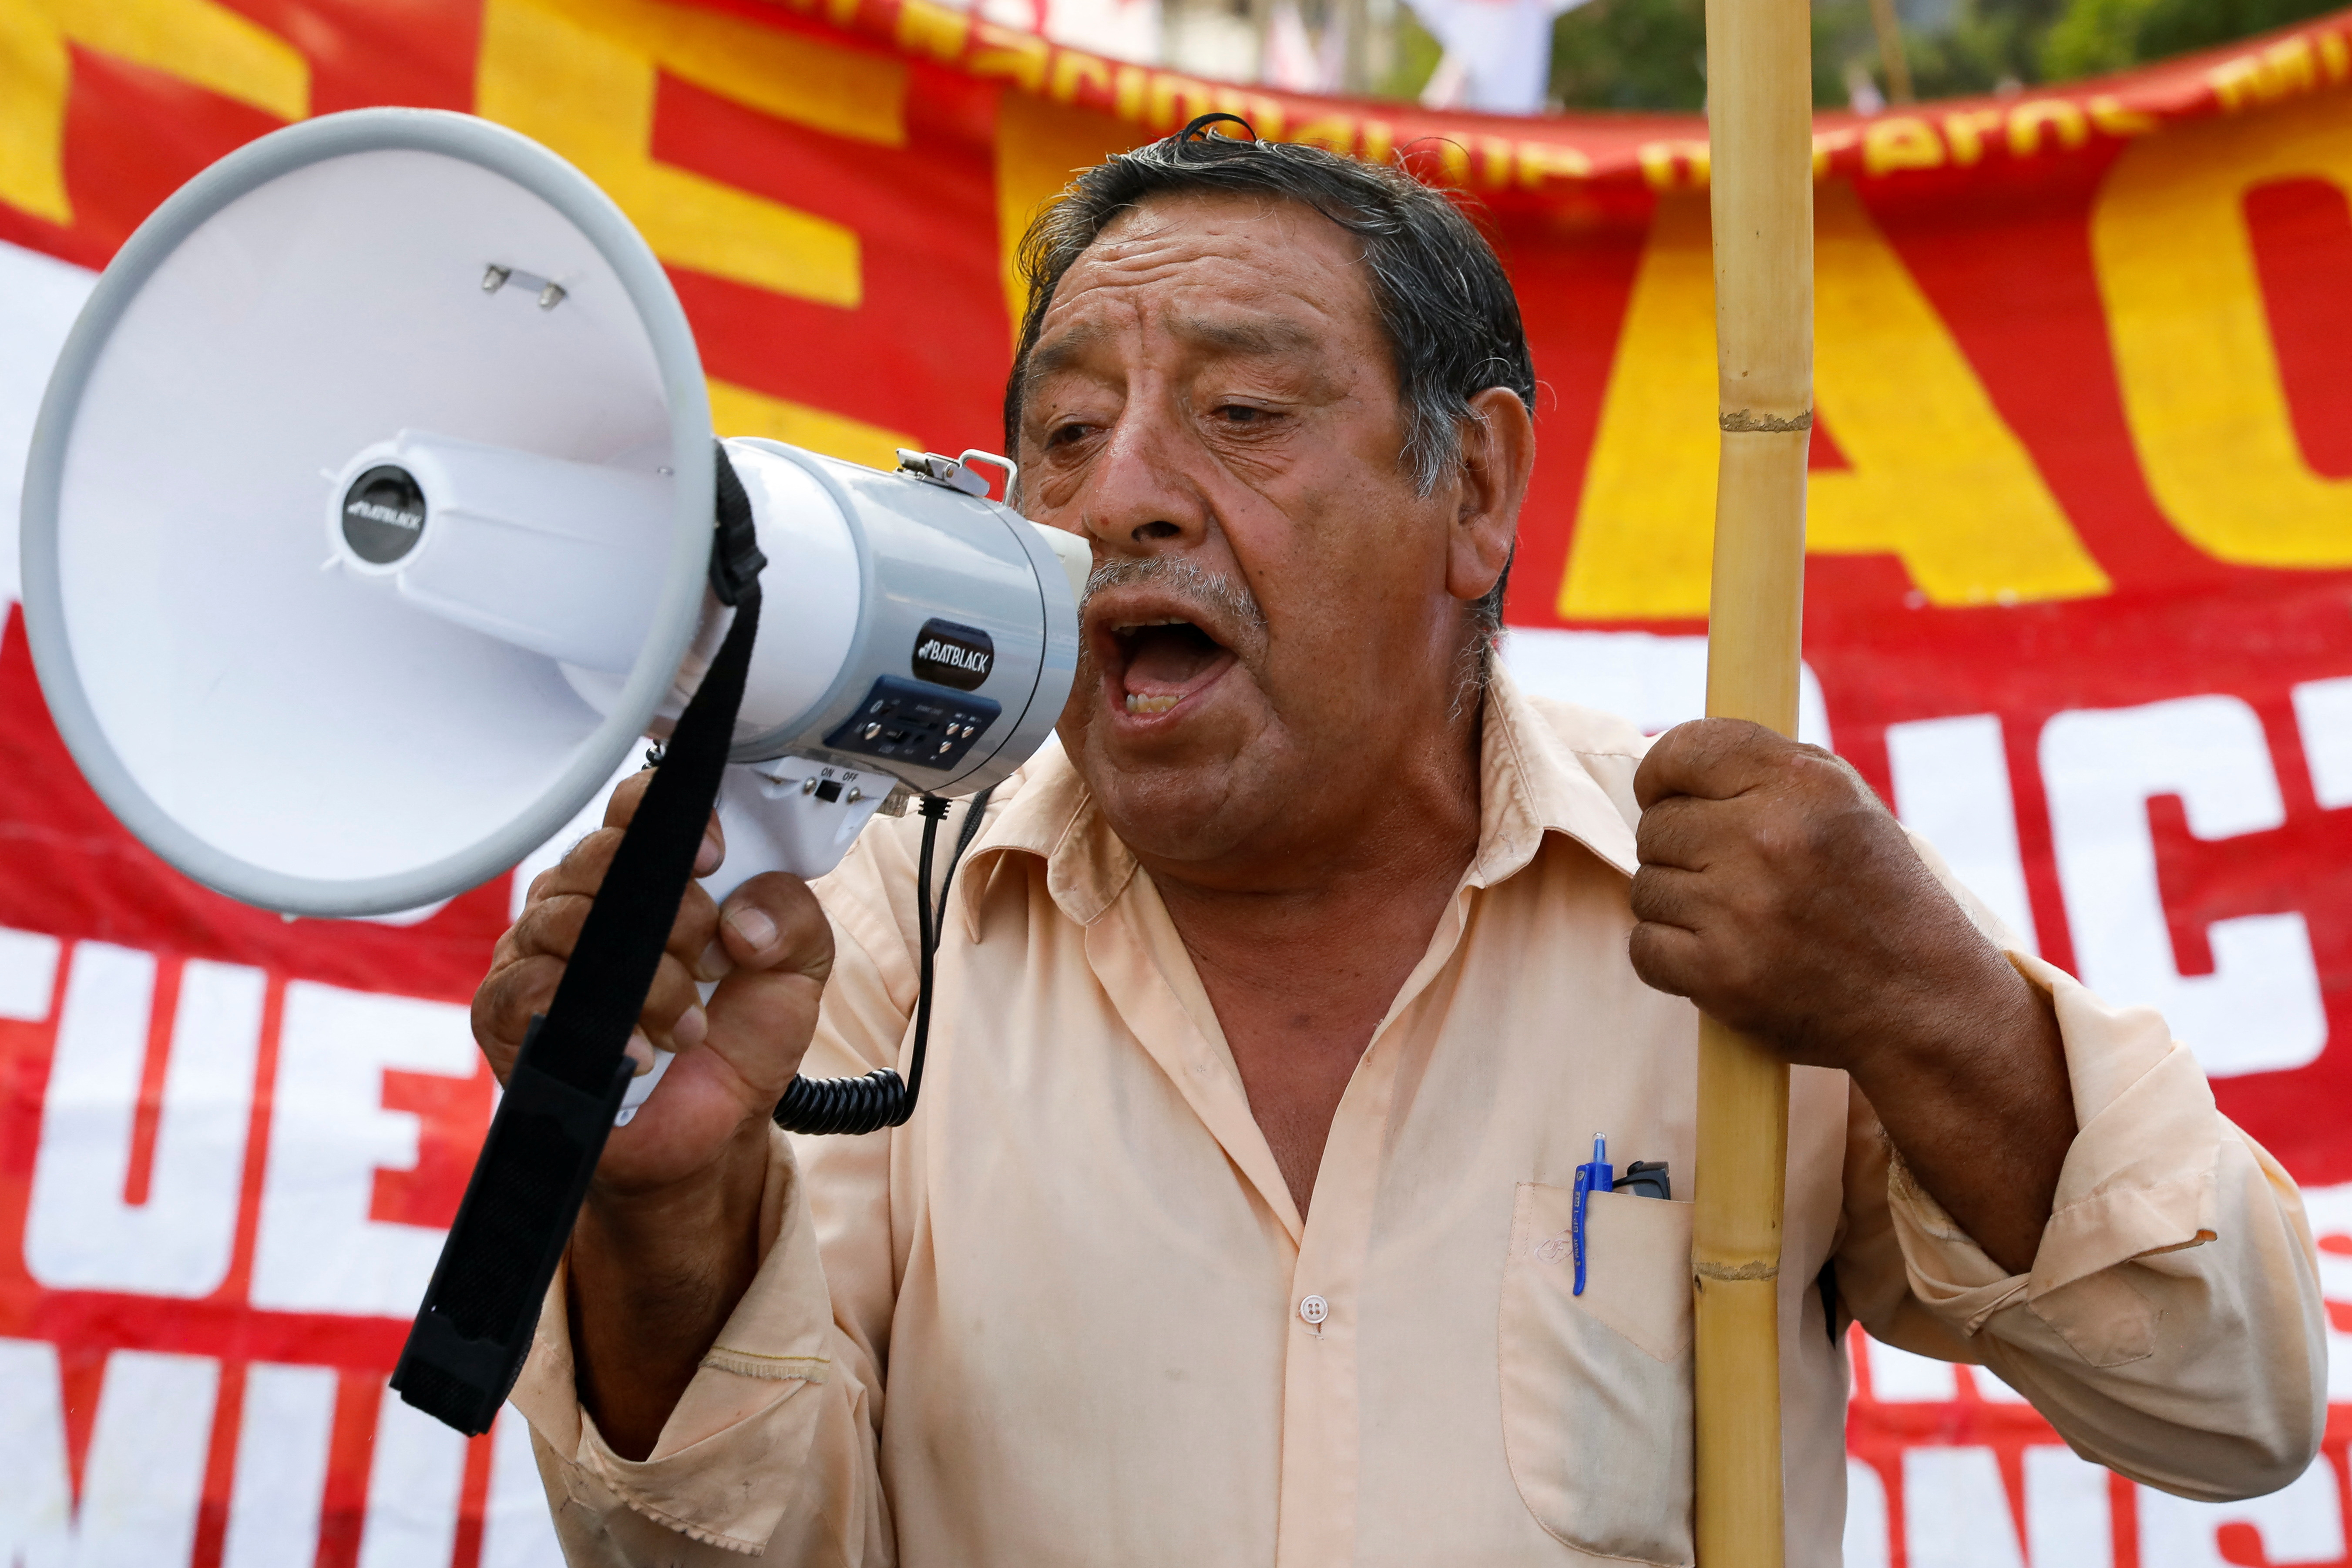 Protest to demand Peru's President Dina Boluarte to step down, in Lima